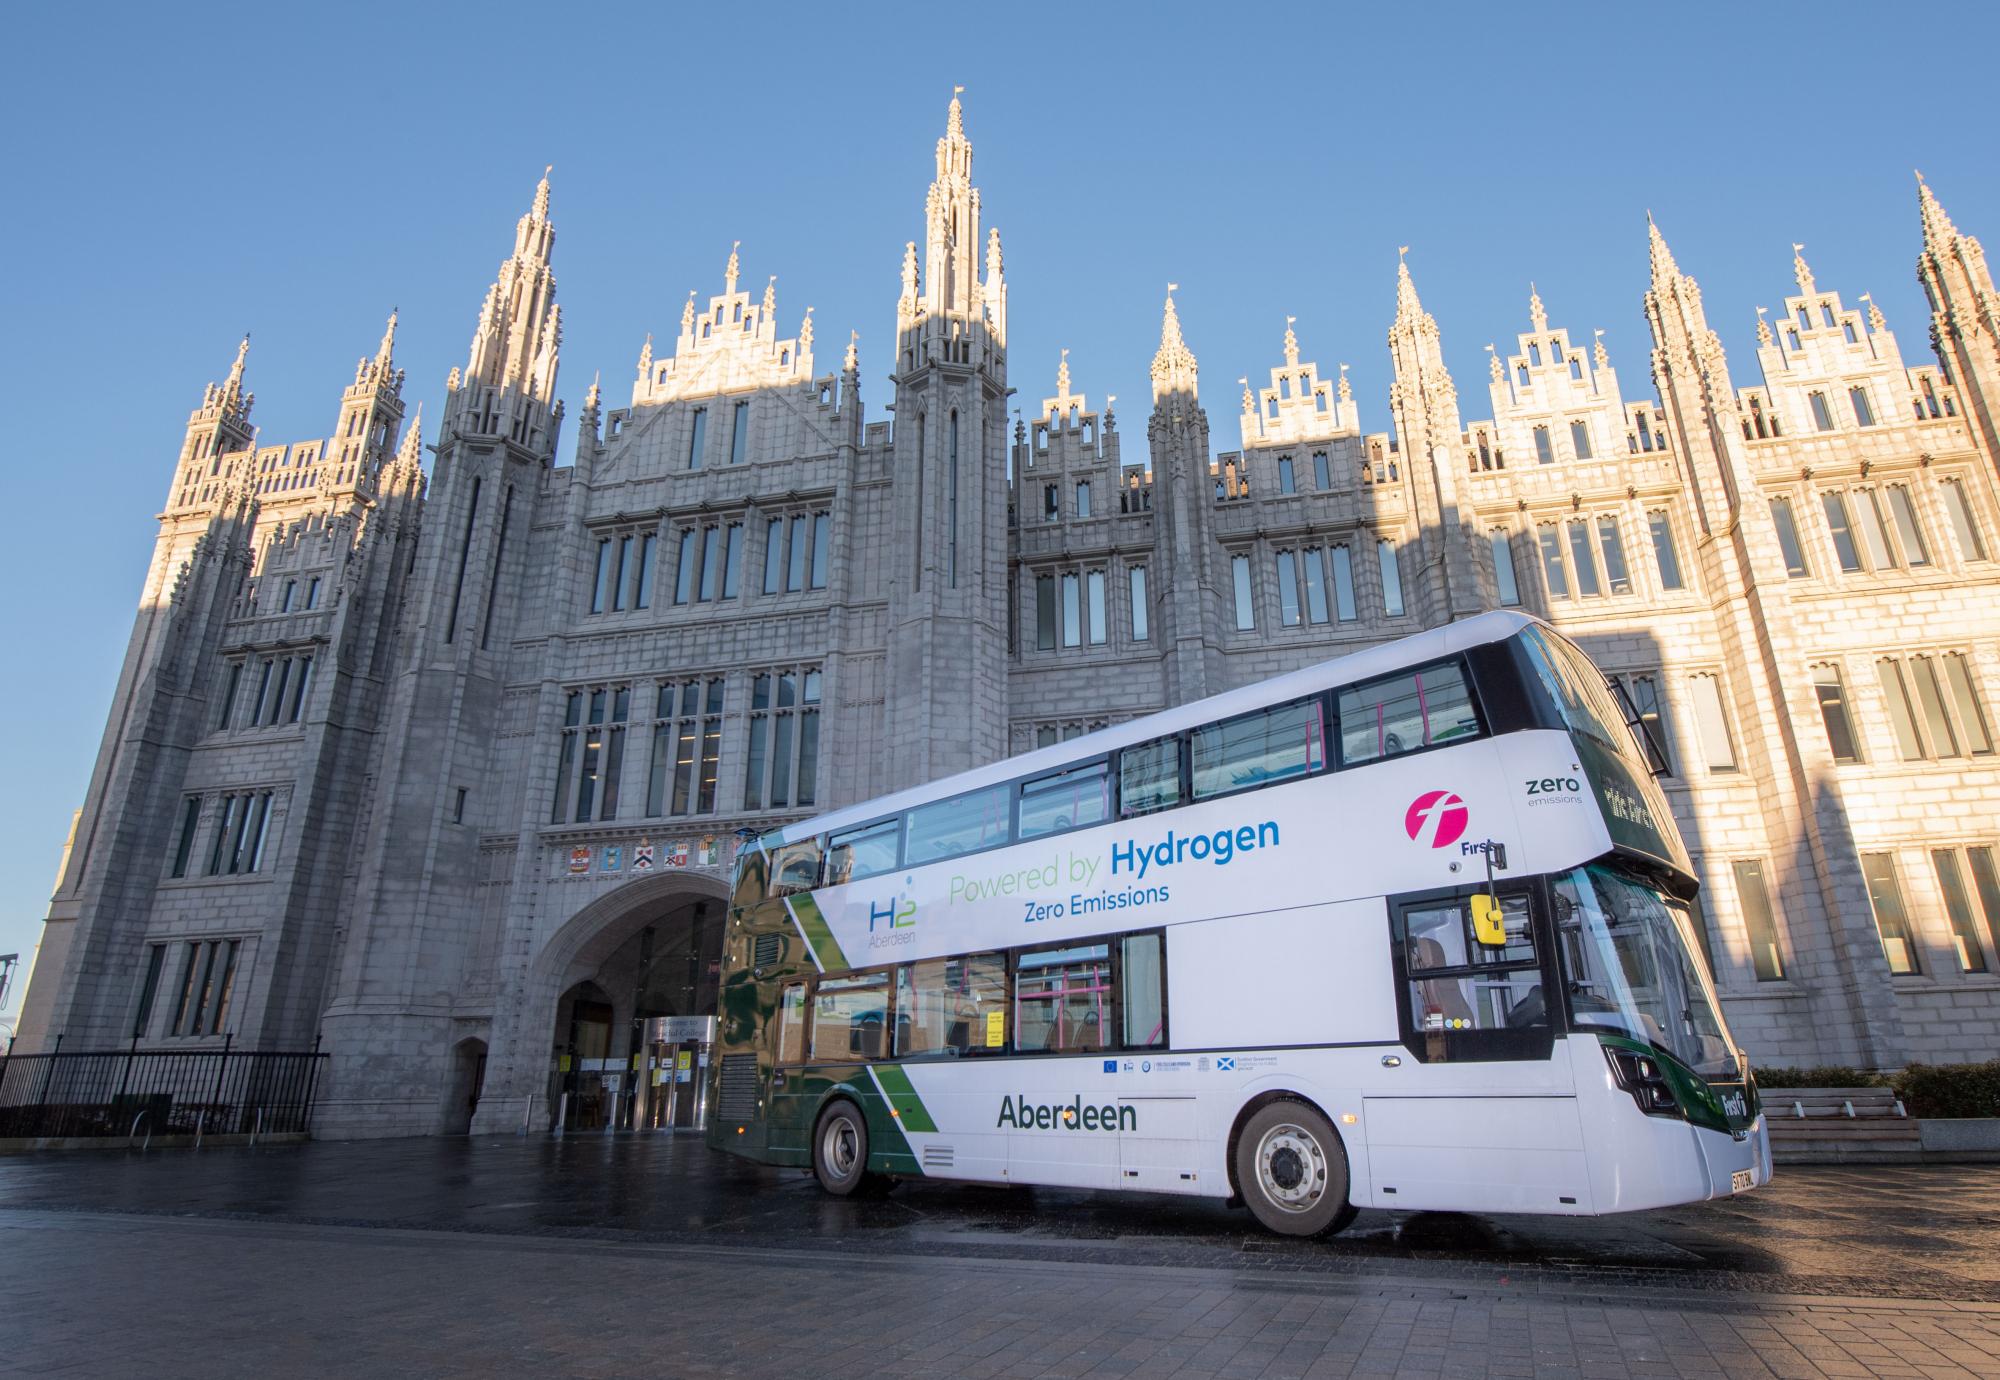 Hydrogen bus in Aberdeen